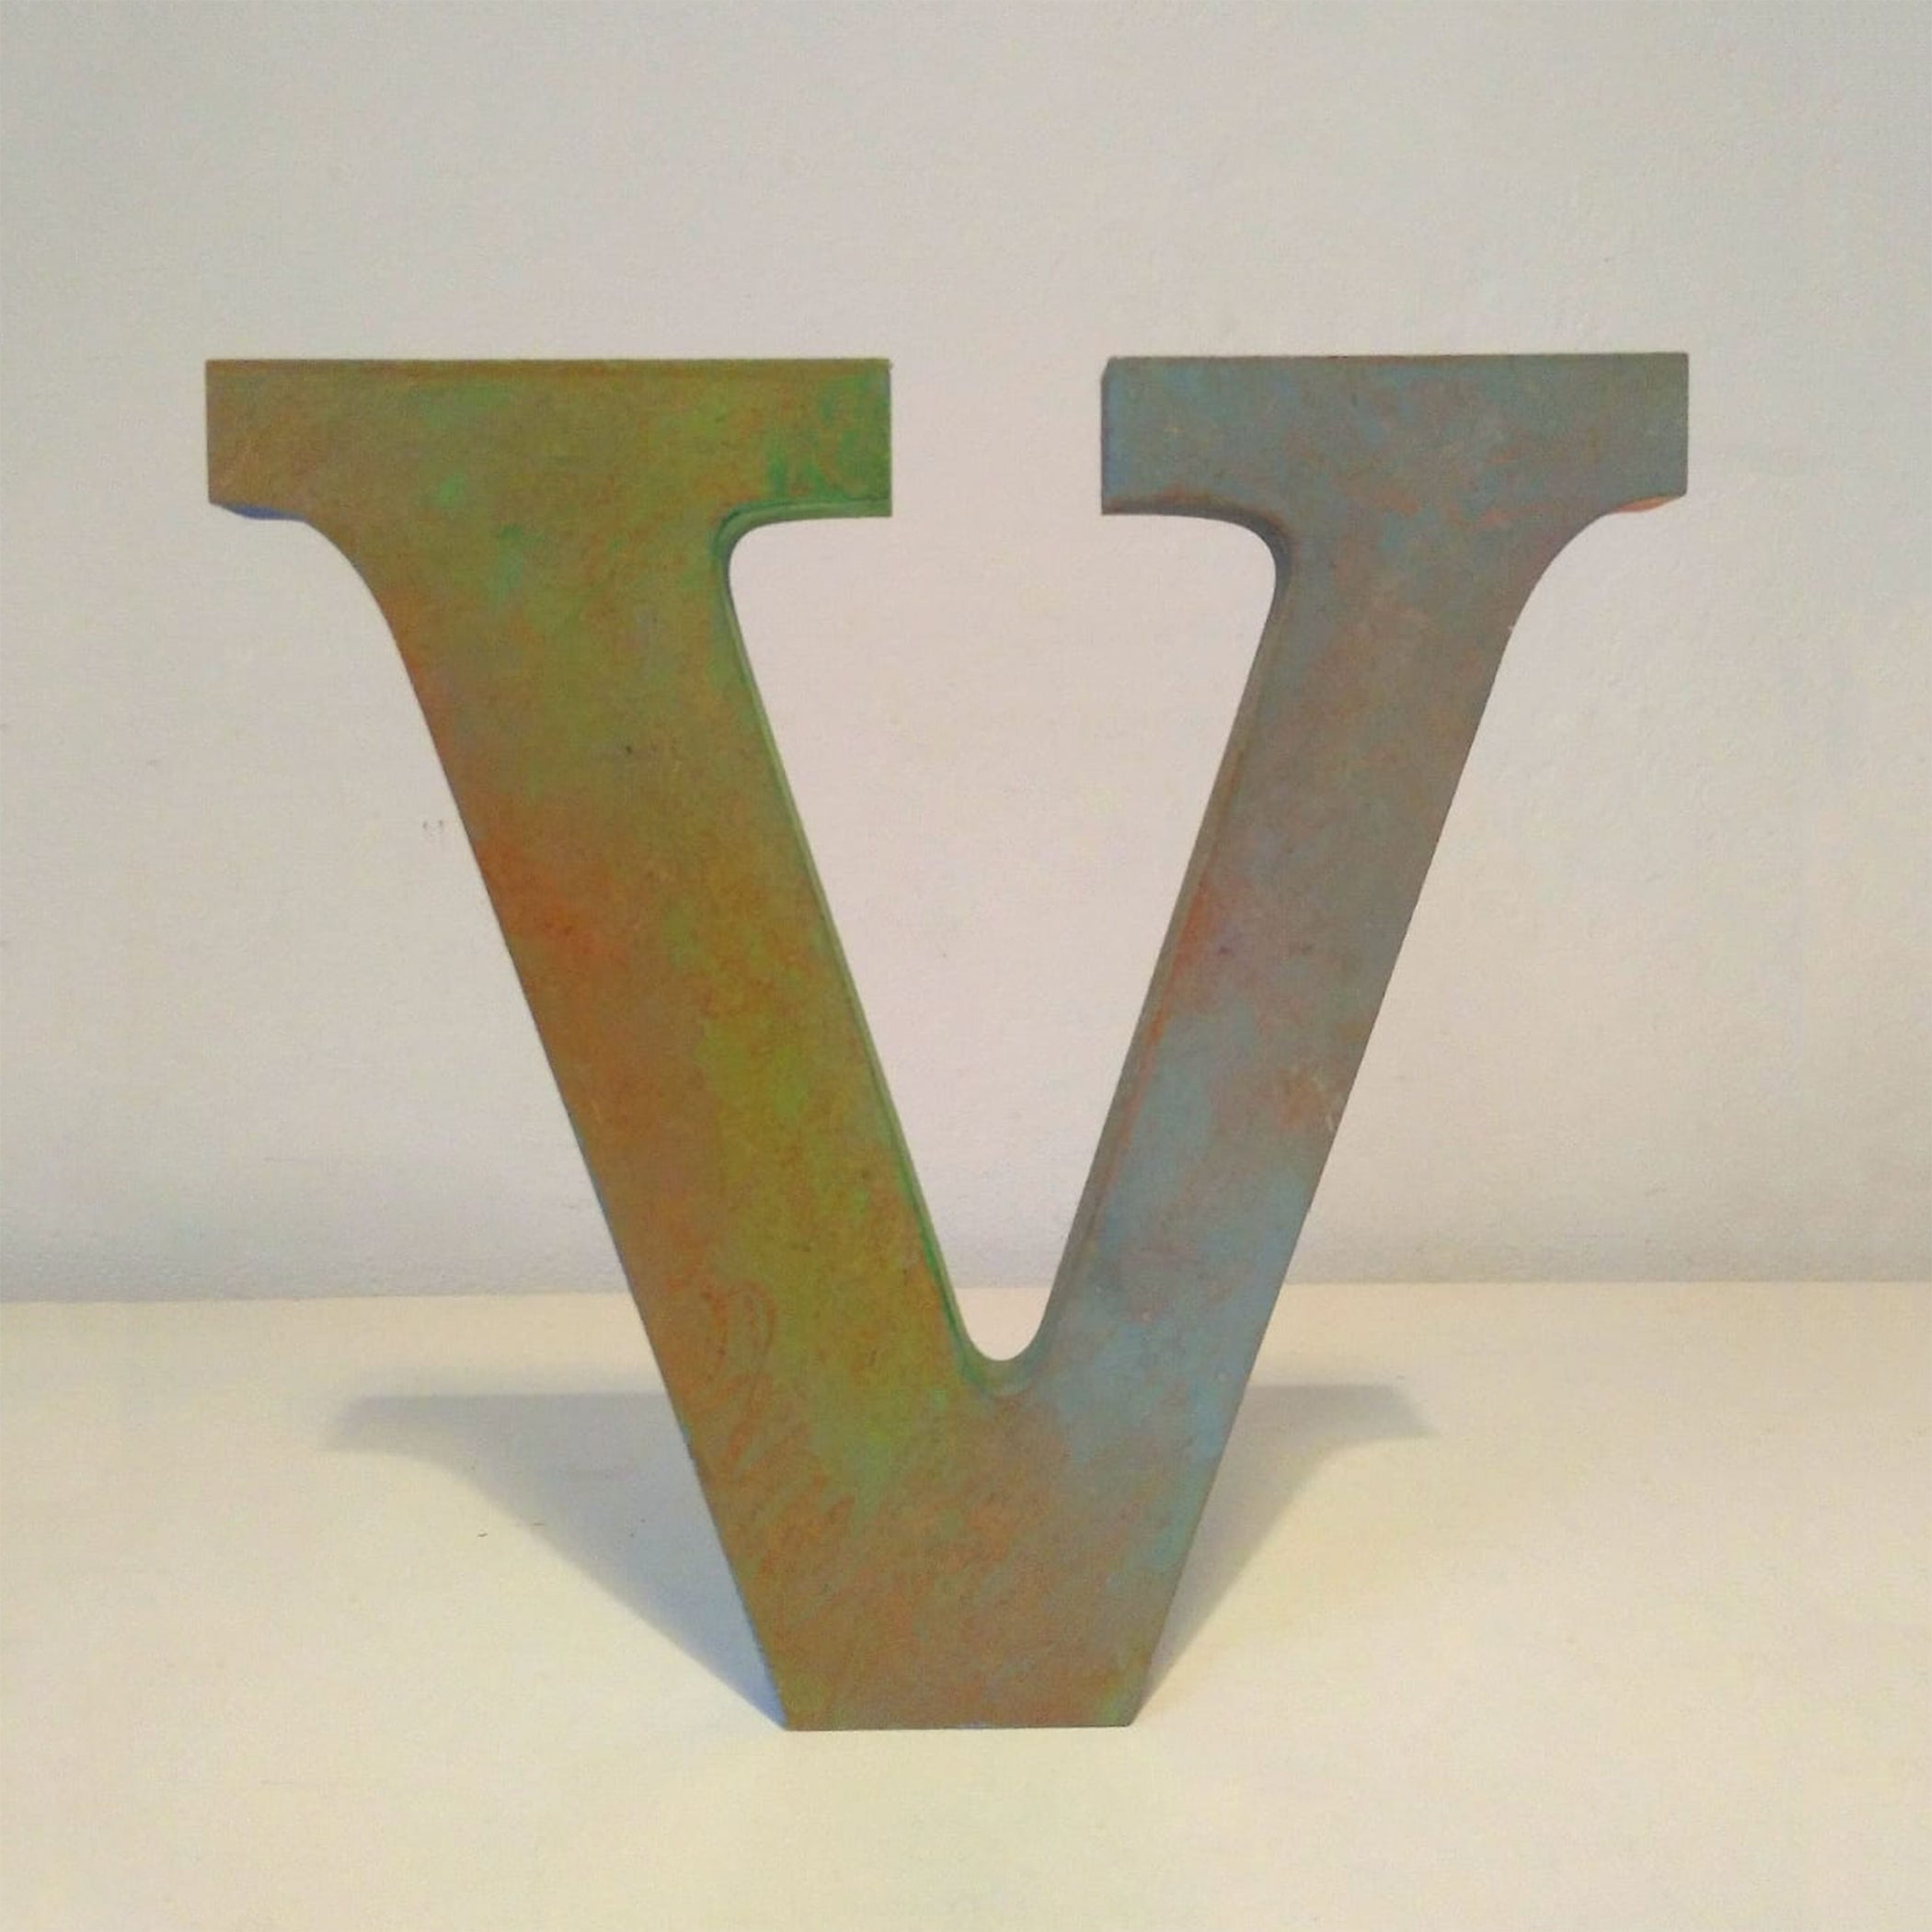 Lettera V in legno dipinta dall'artista Yomariabrex